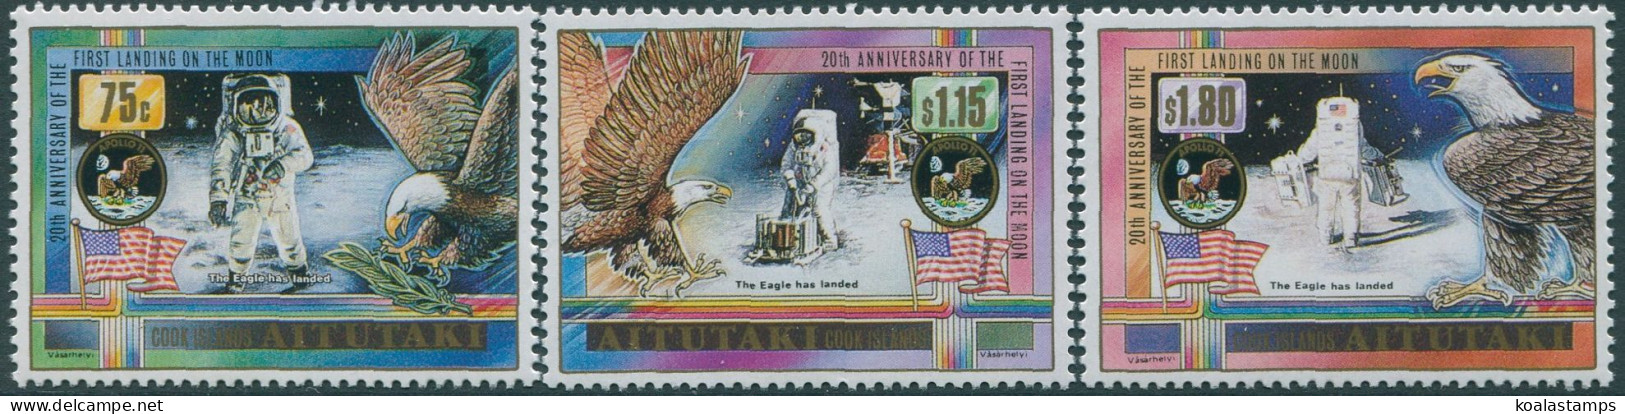 Aitutaki 1989 SG602-604 Moonlanding Set MNH - Islas Cook